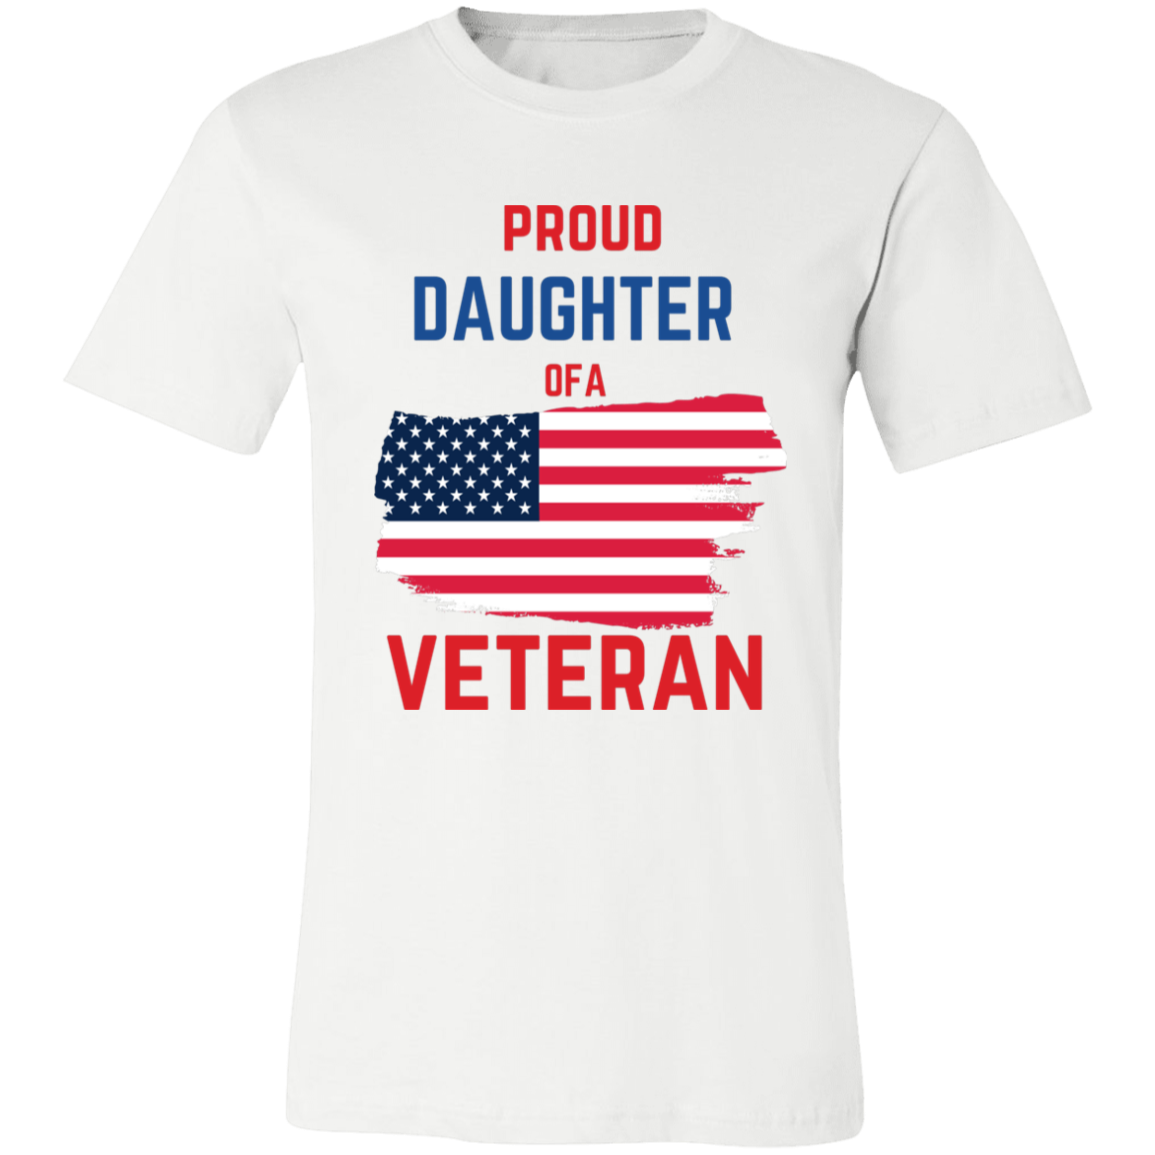 I am a Proud Daughter of a Veteran